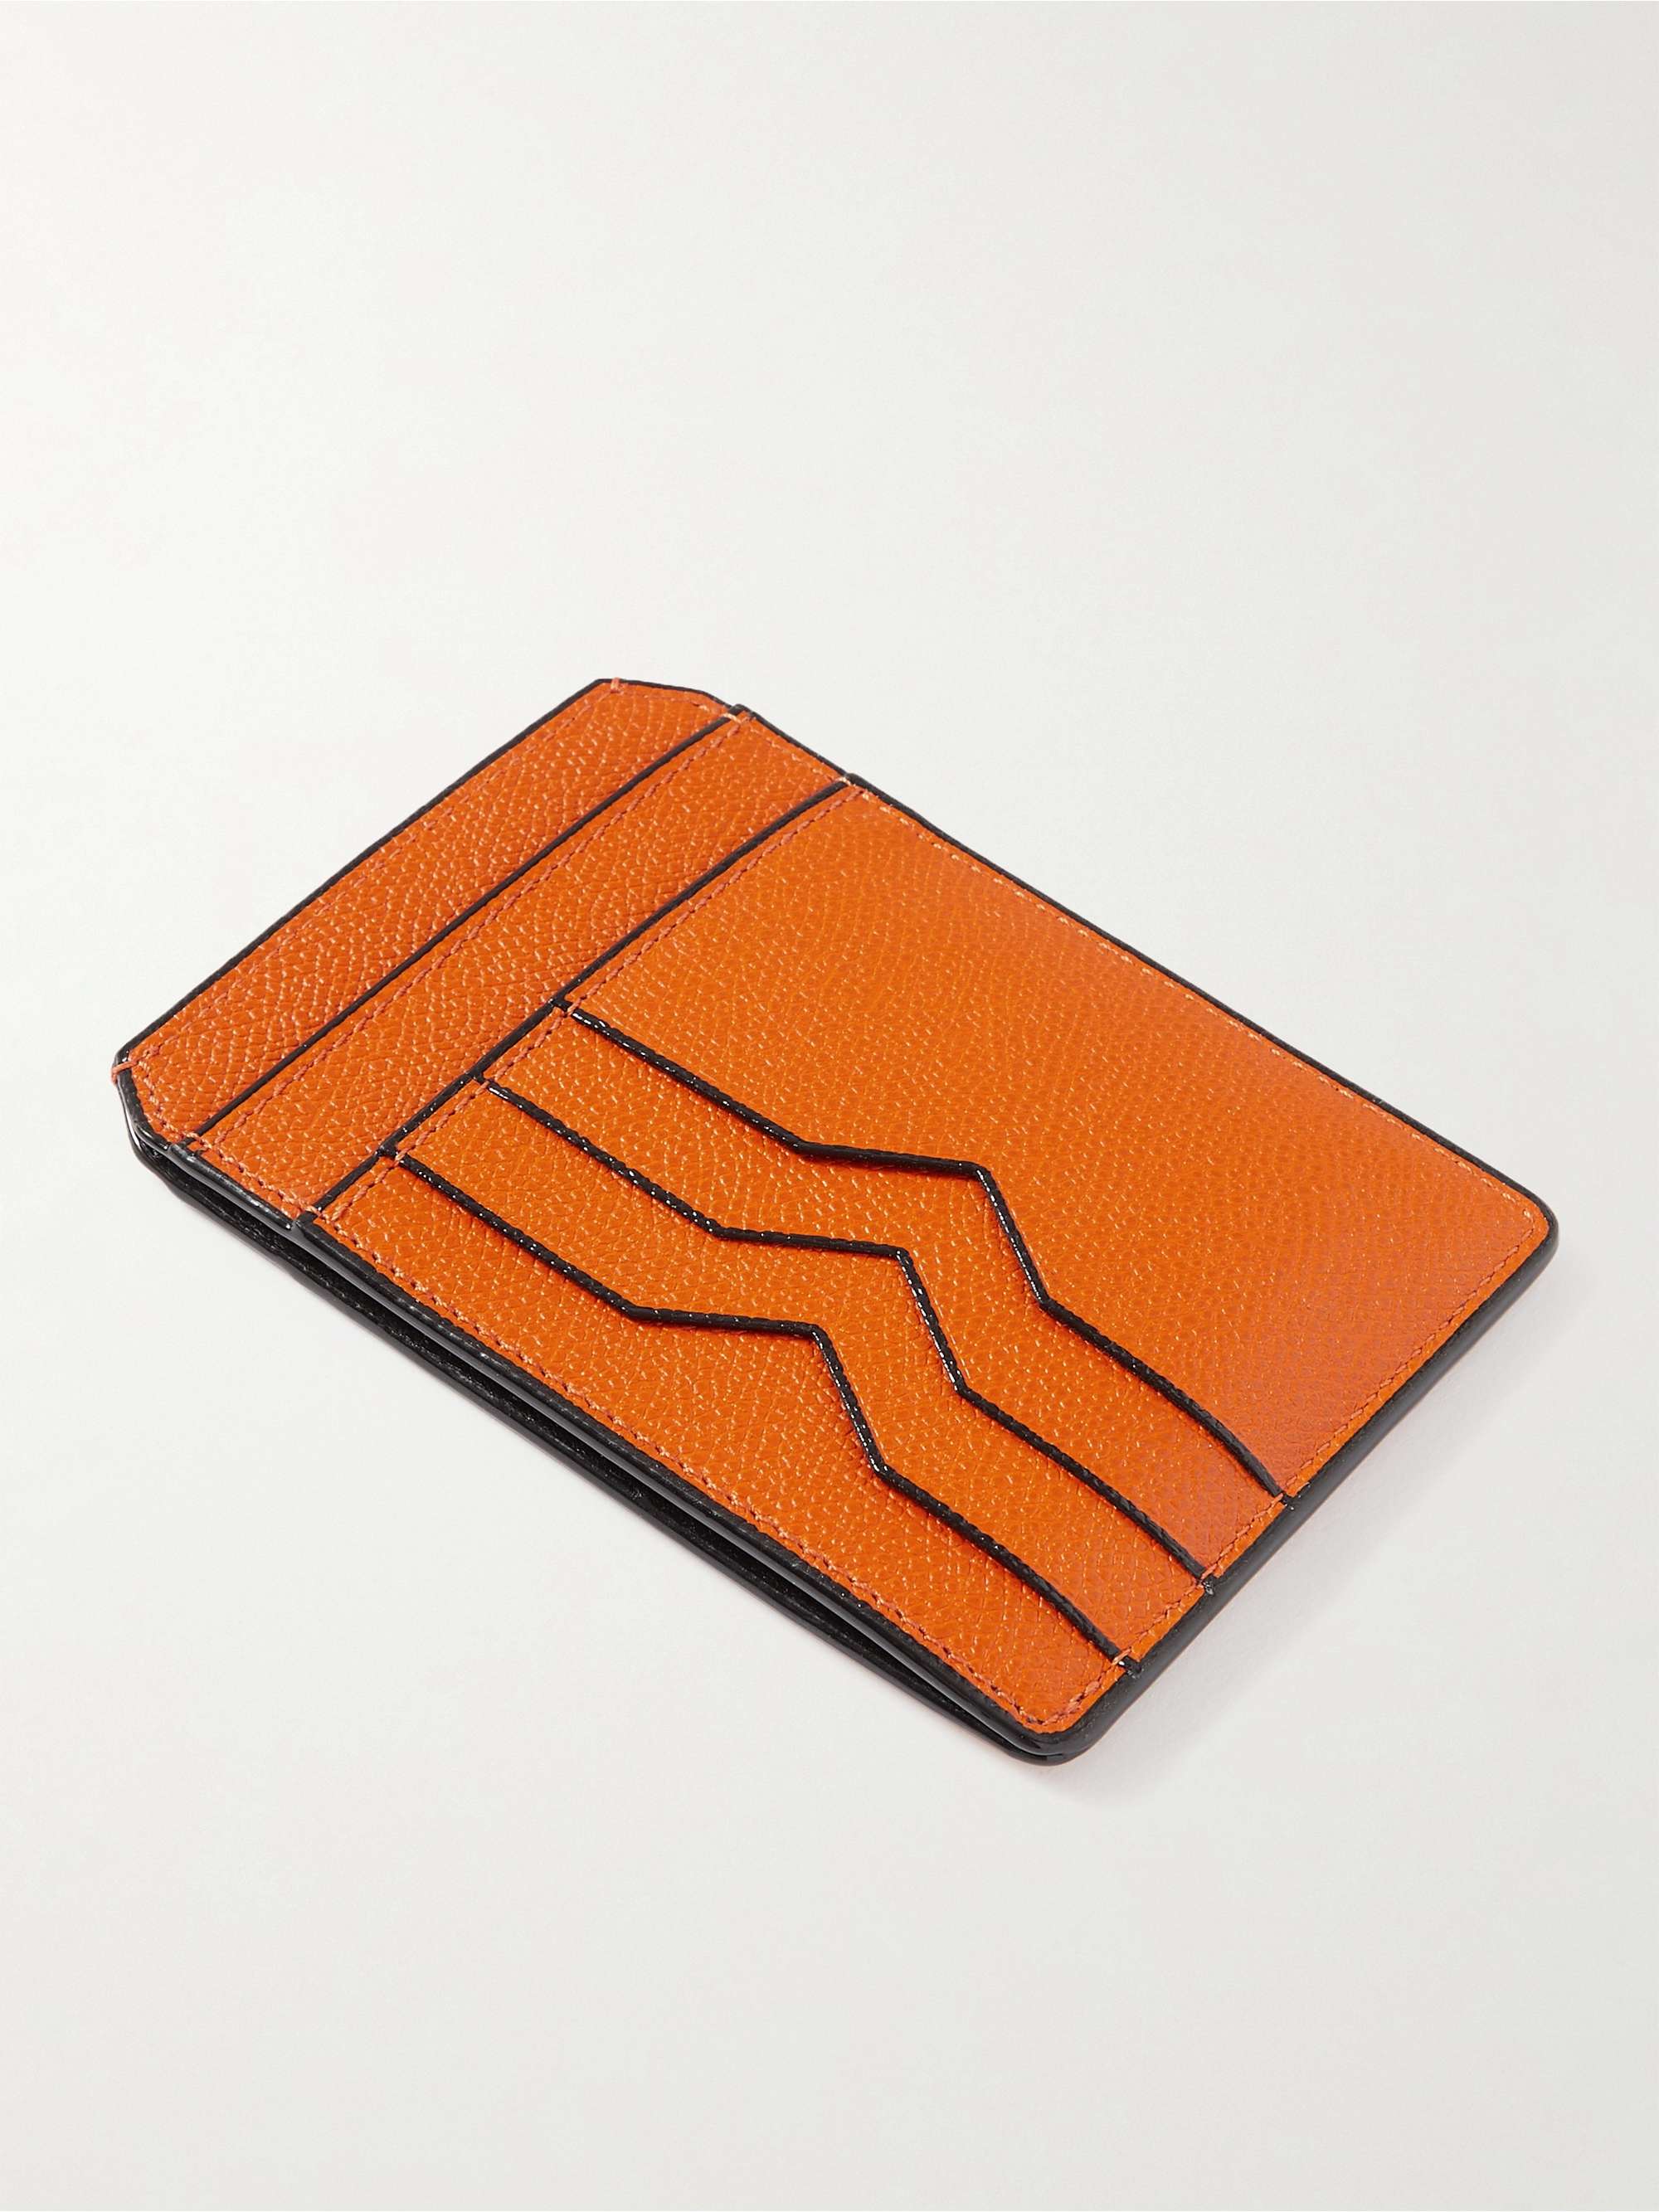 VALEXTRA Pebble-Grain Leather Cardholder